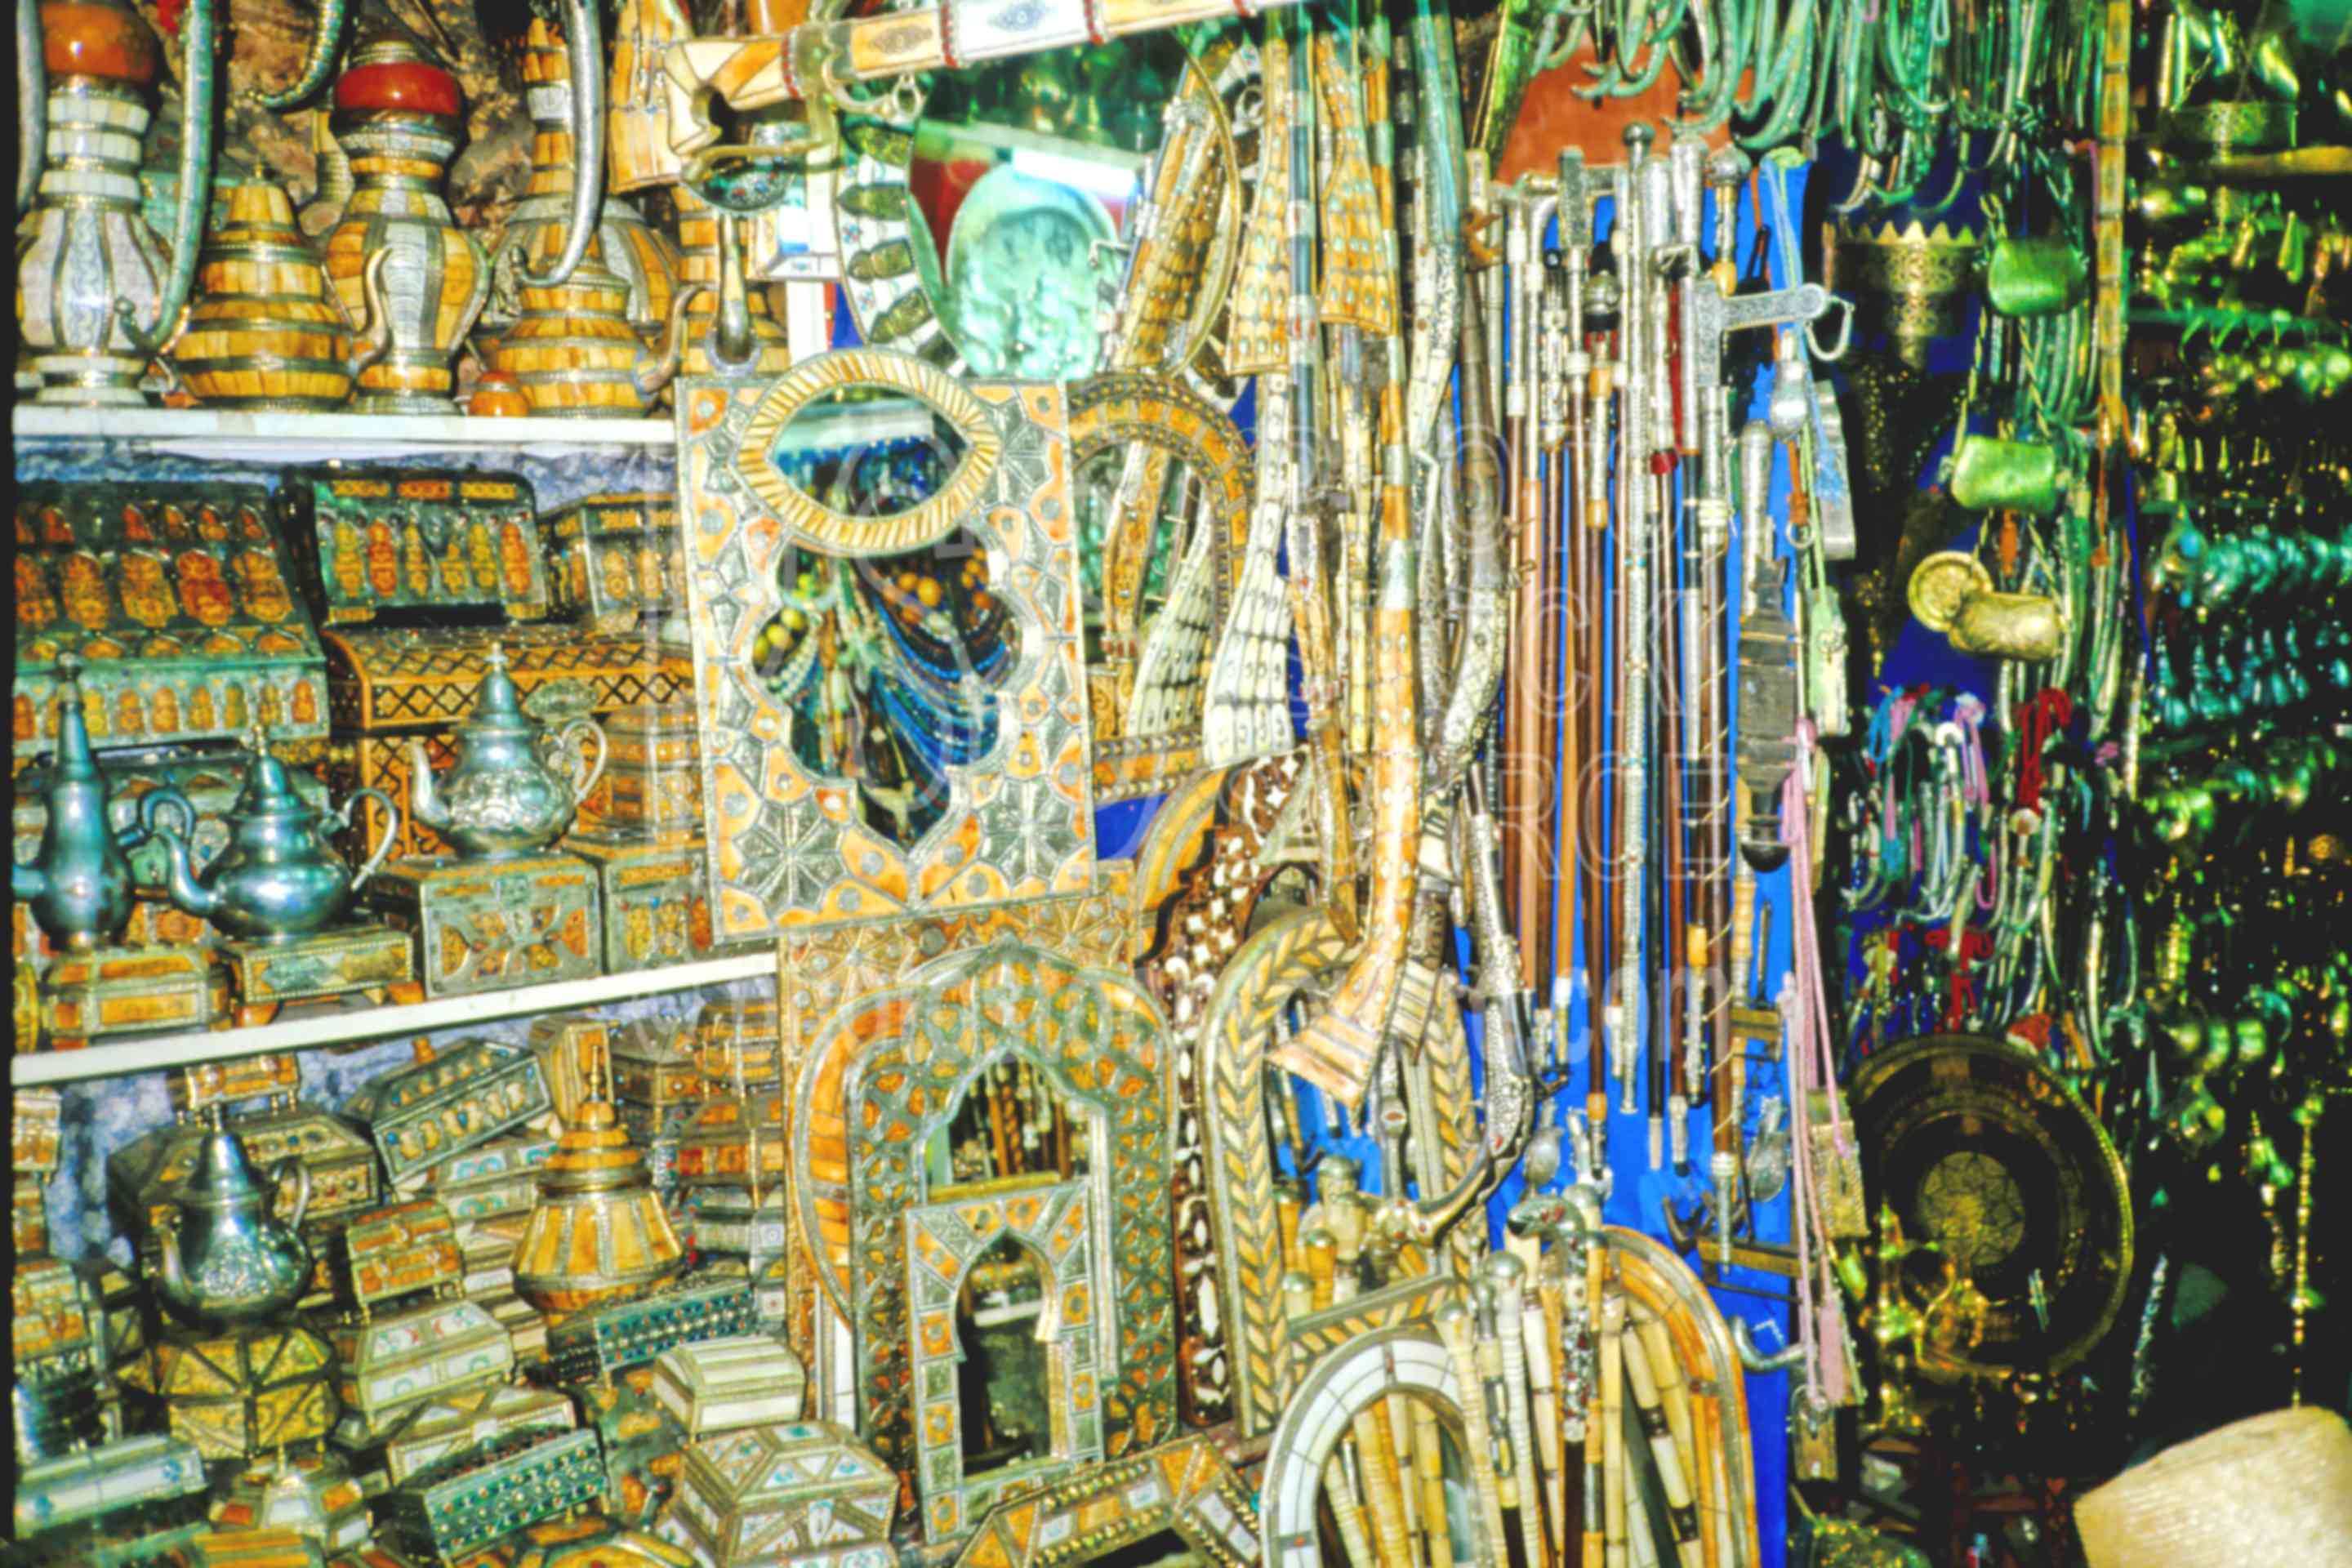 Inside Shop,shop,market,morocco markets